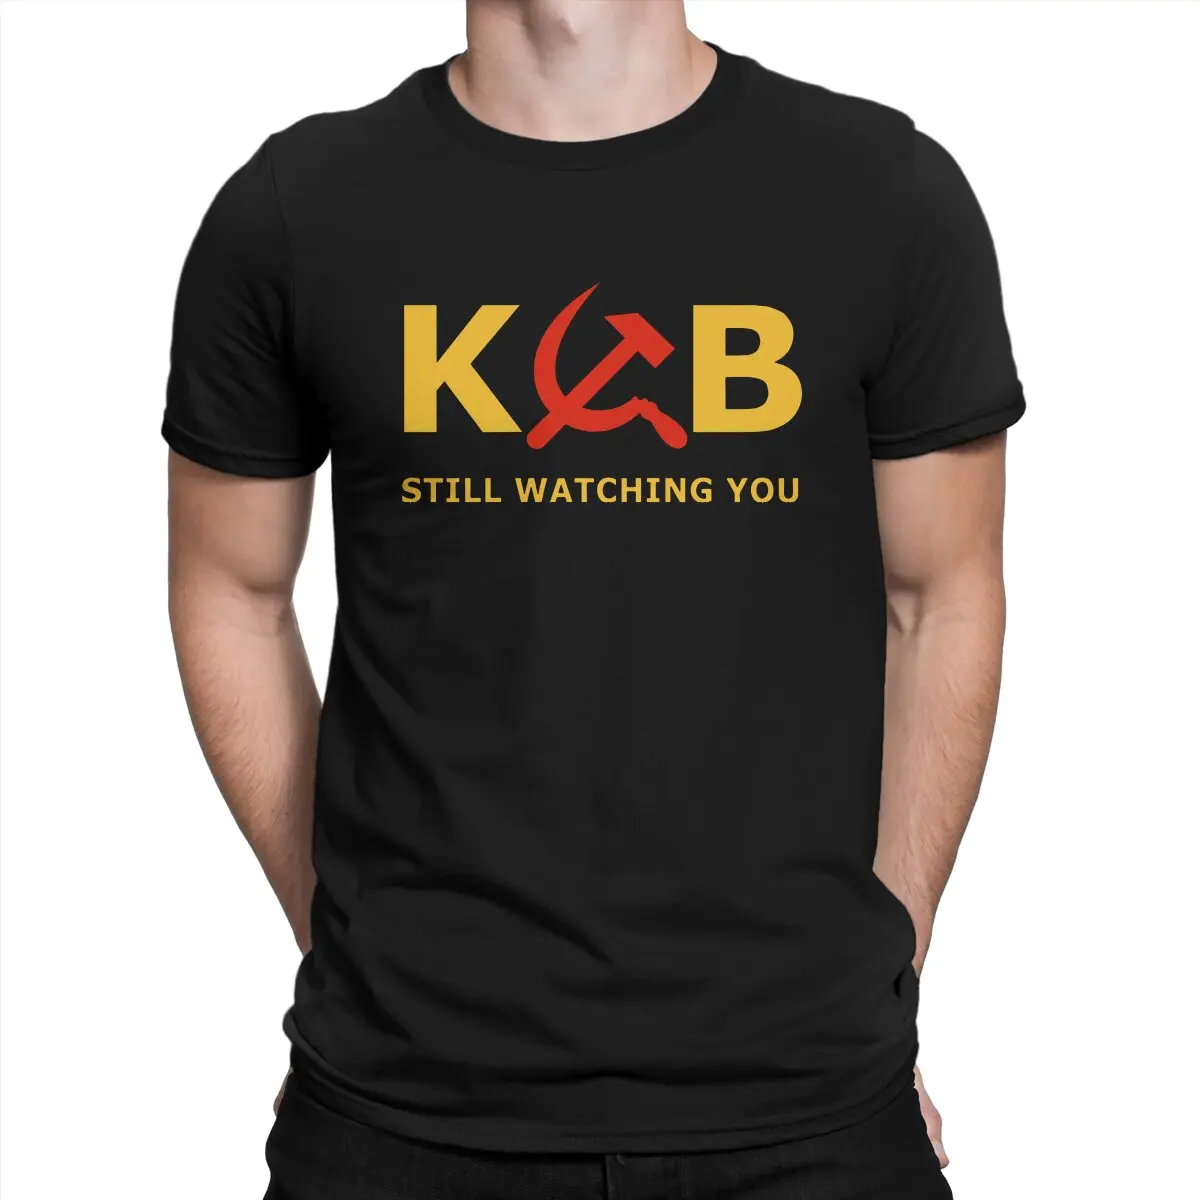 

Still Watching You T Shirt Men 100% Cotton Fun T-Shirts Crewneck KGB Vladimir Lenin Tees Short Sleeve Clothes Gift Idea